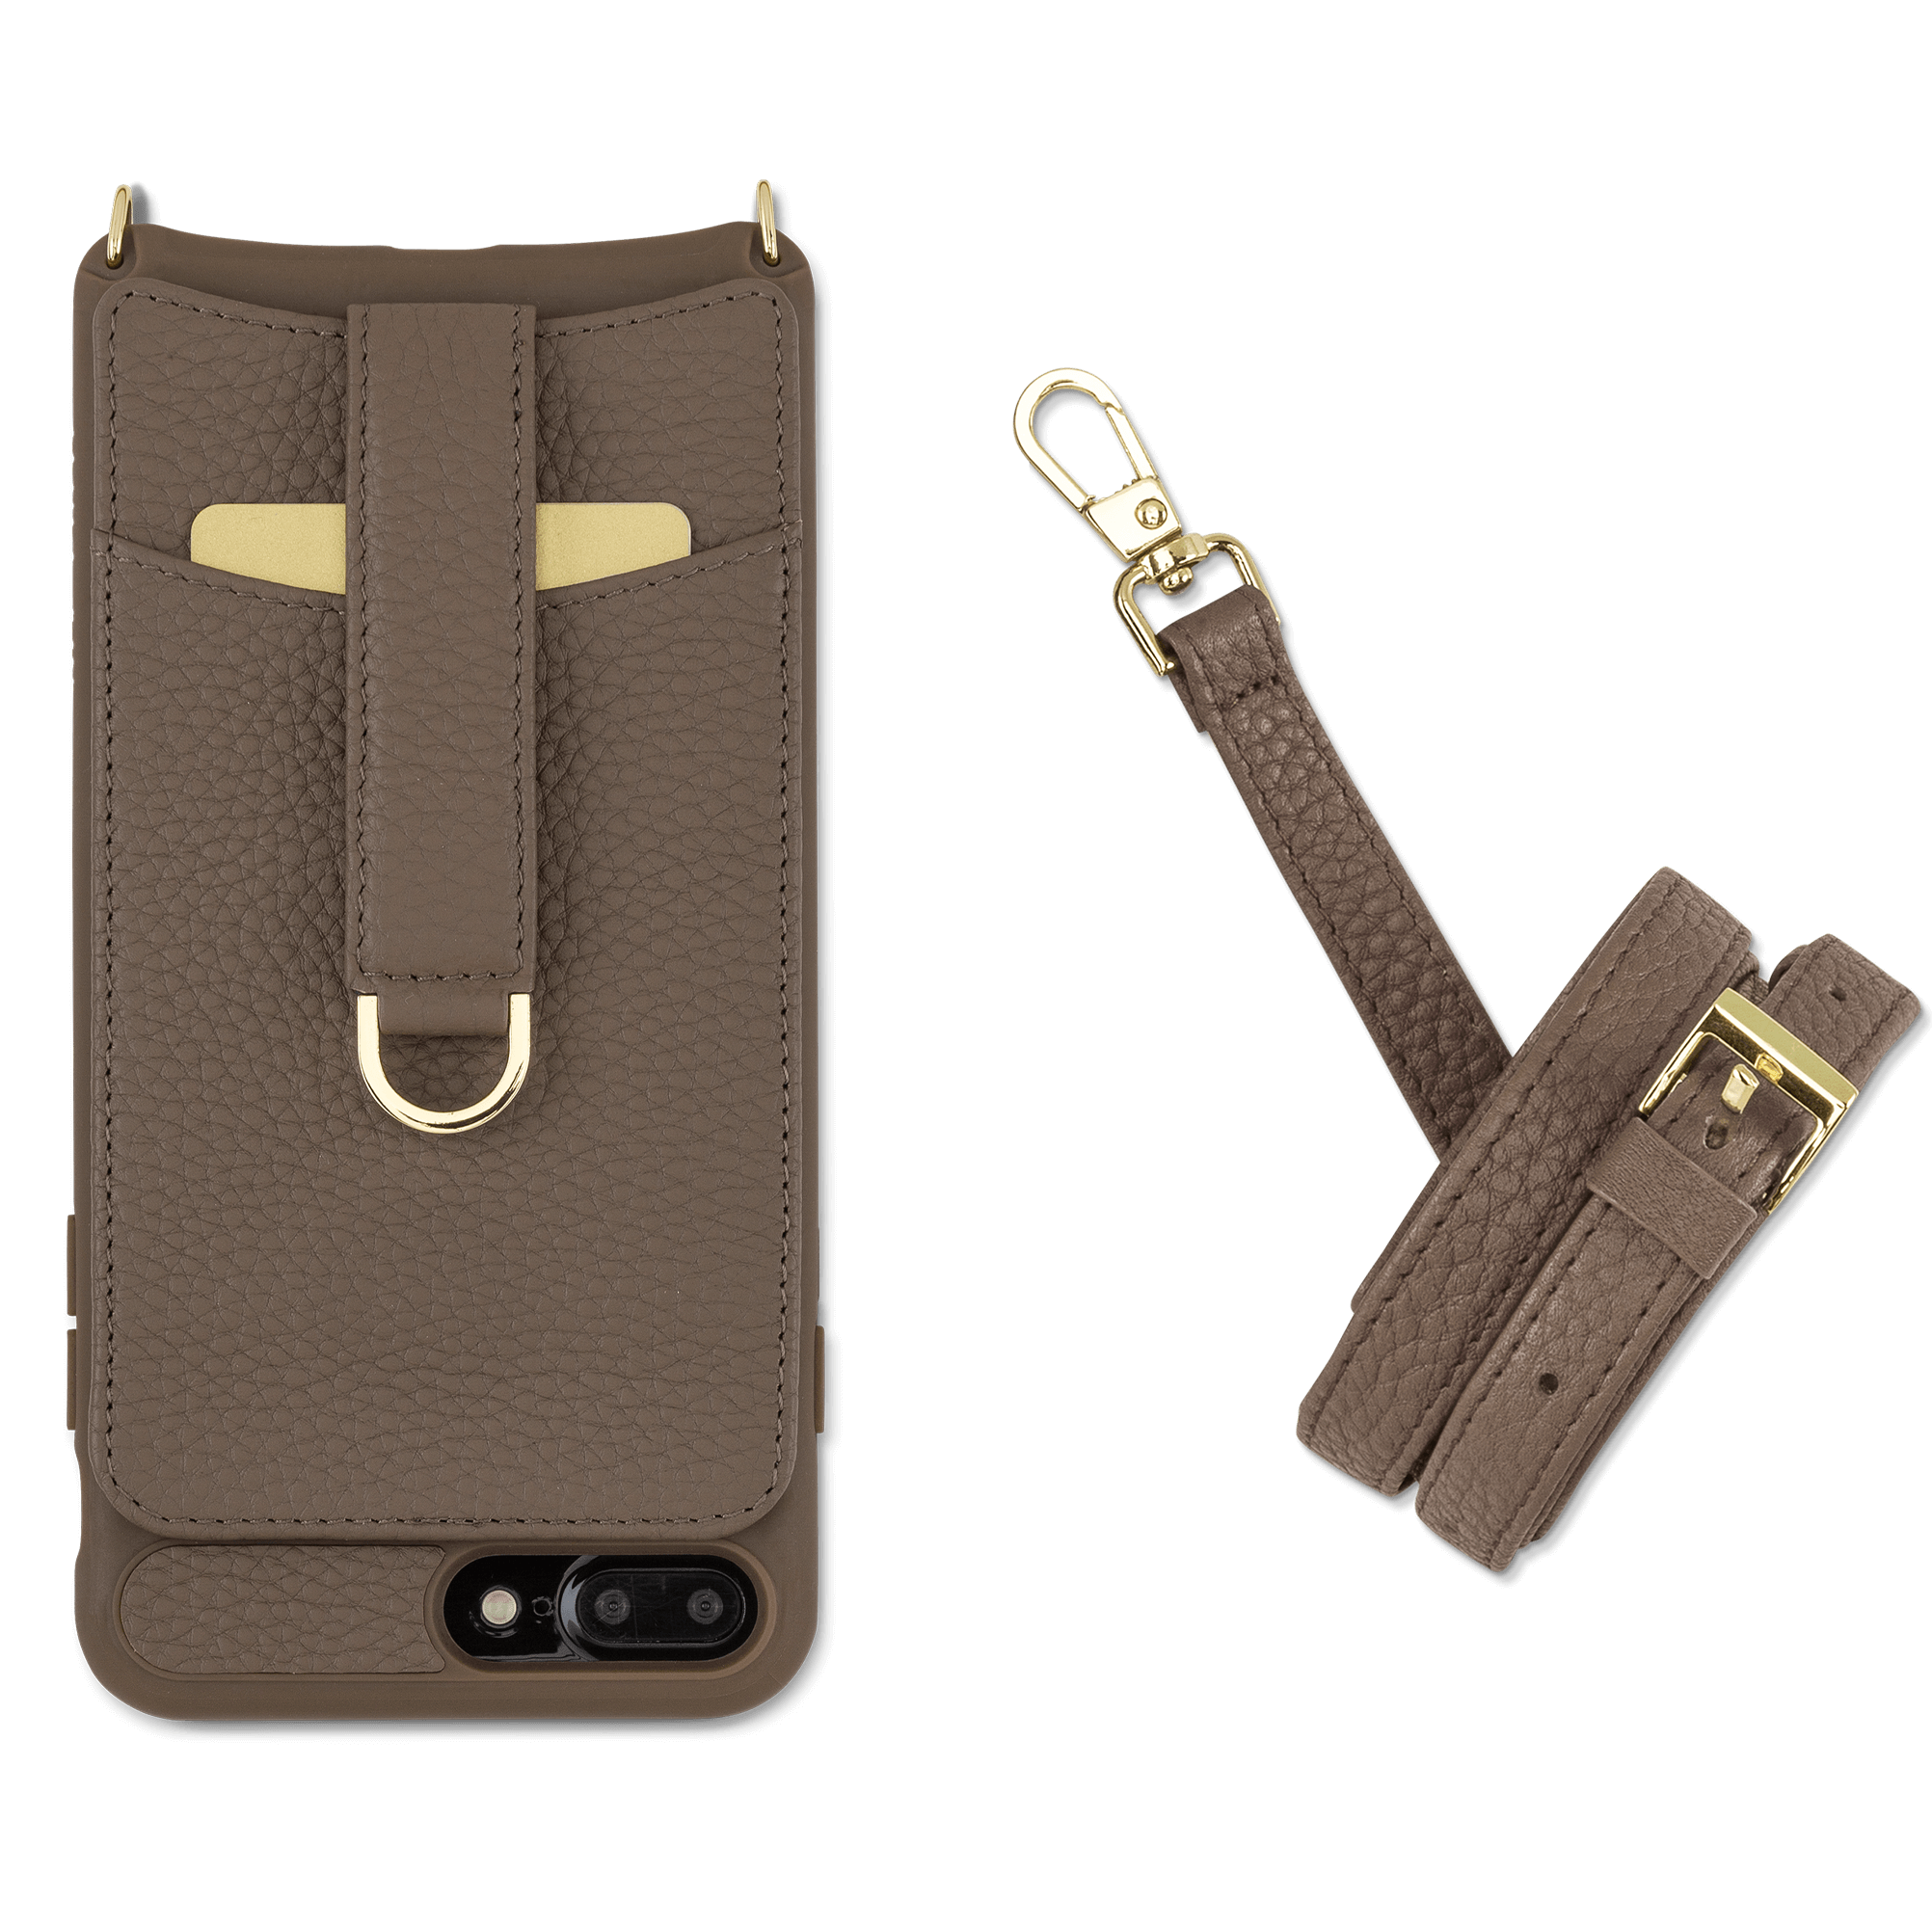 Lacass for iPhone 7 Plus/iPhone 8 Plus Crossbody Chain Dual Zipper  Detachable Magnetic Leather Wallet Case Cover Wristlets Clutch Handbag Purse  Wrist Strap 13 Card Slot Money Pocket(Floral Gray) : Amazon.in: Bags,